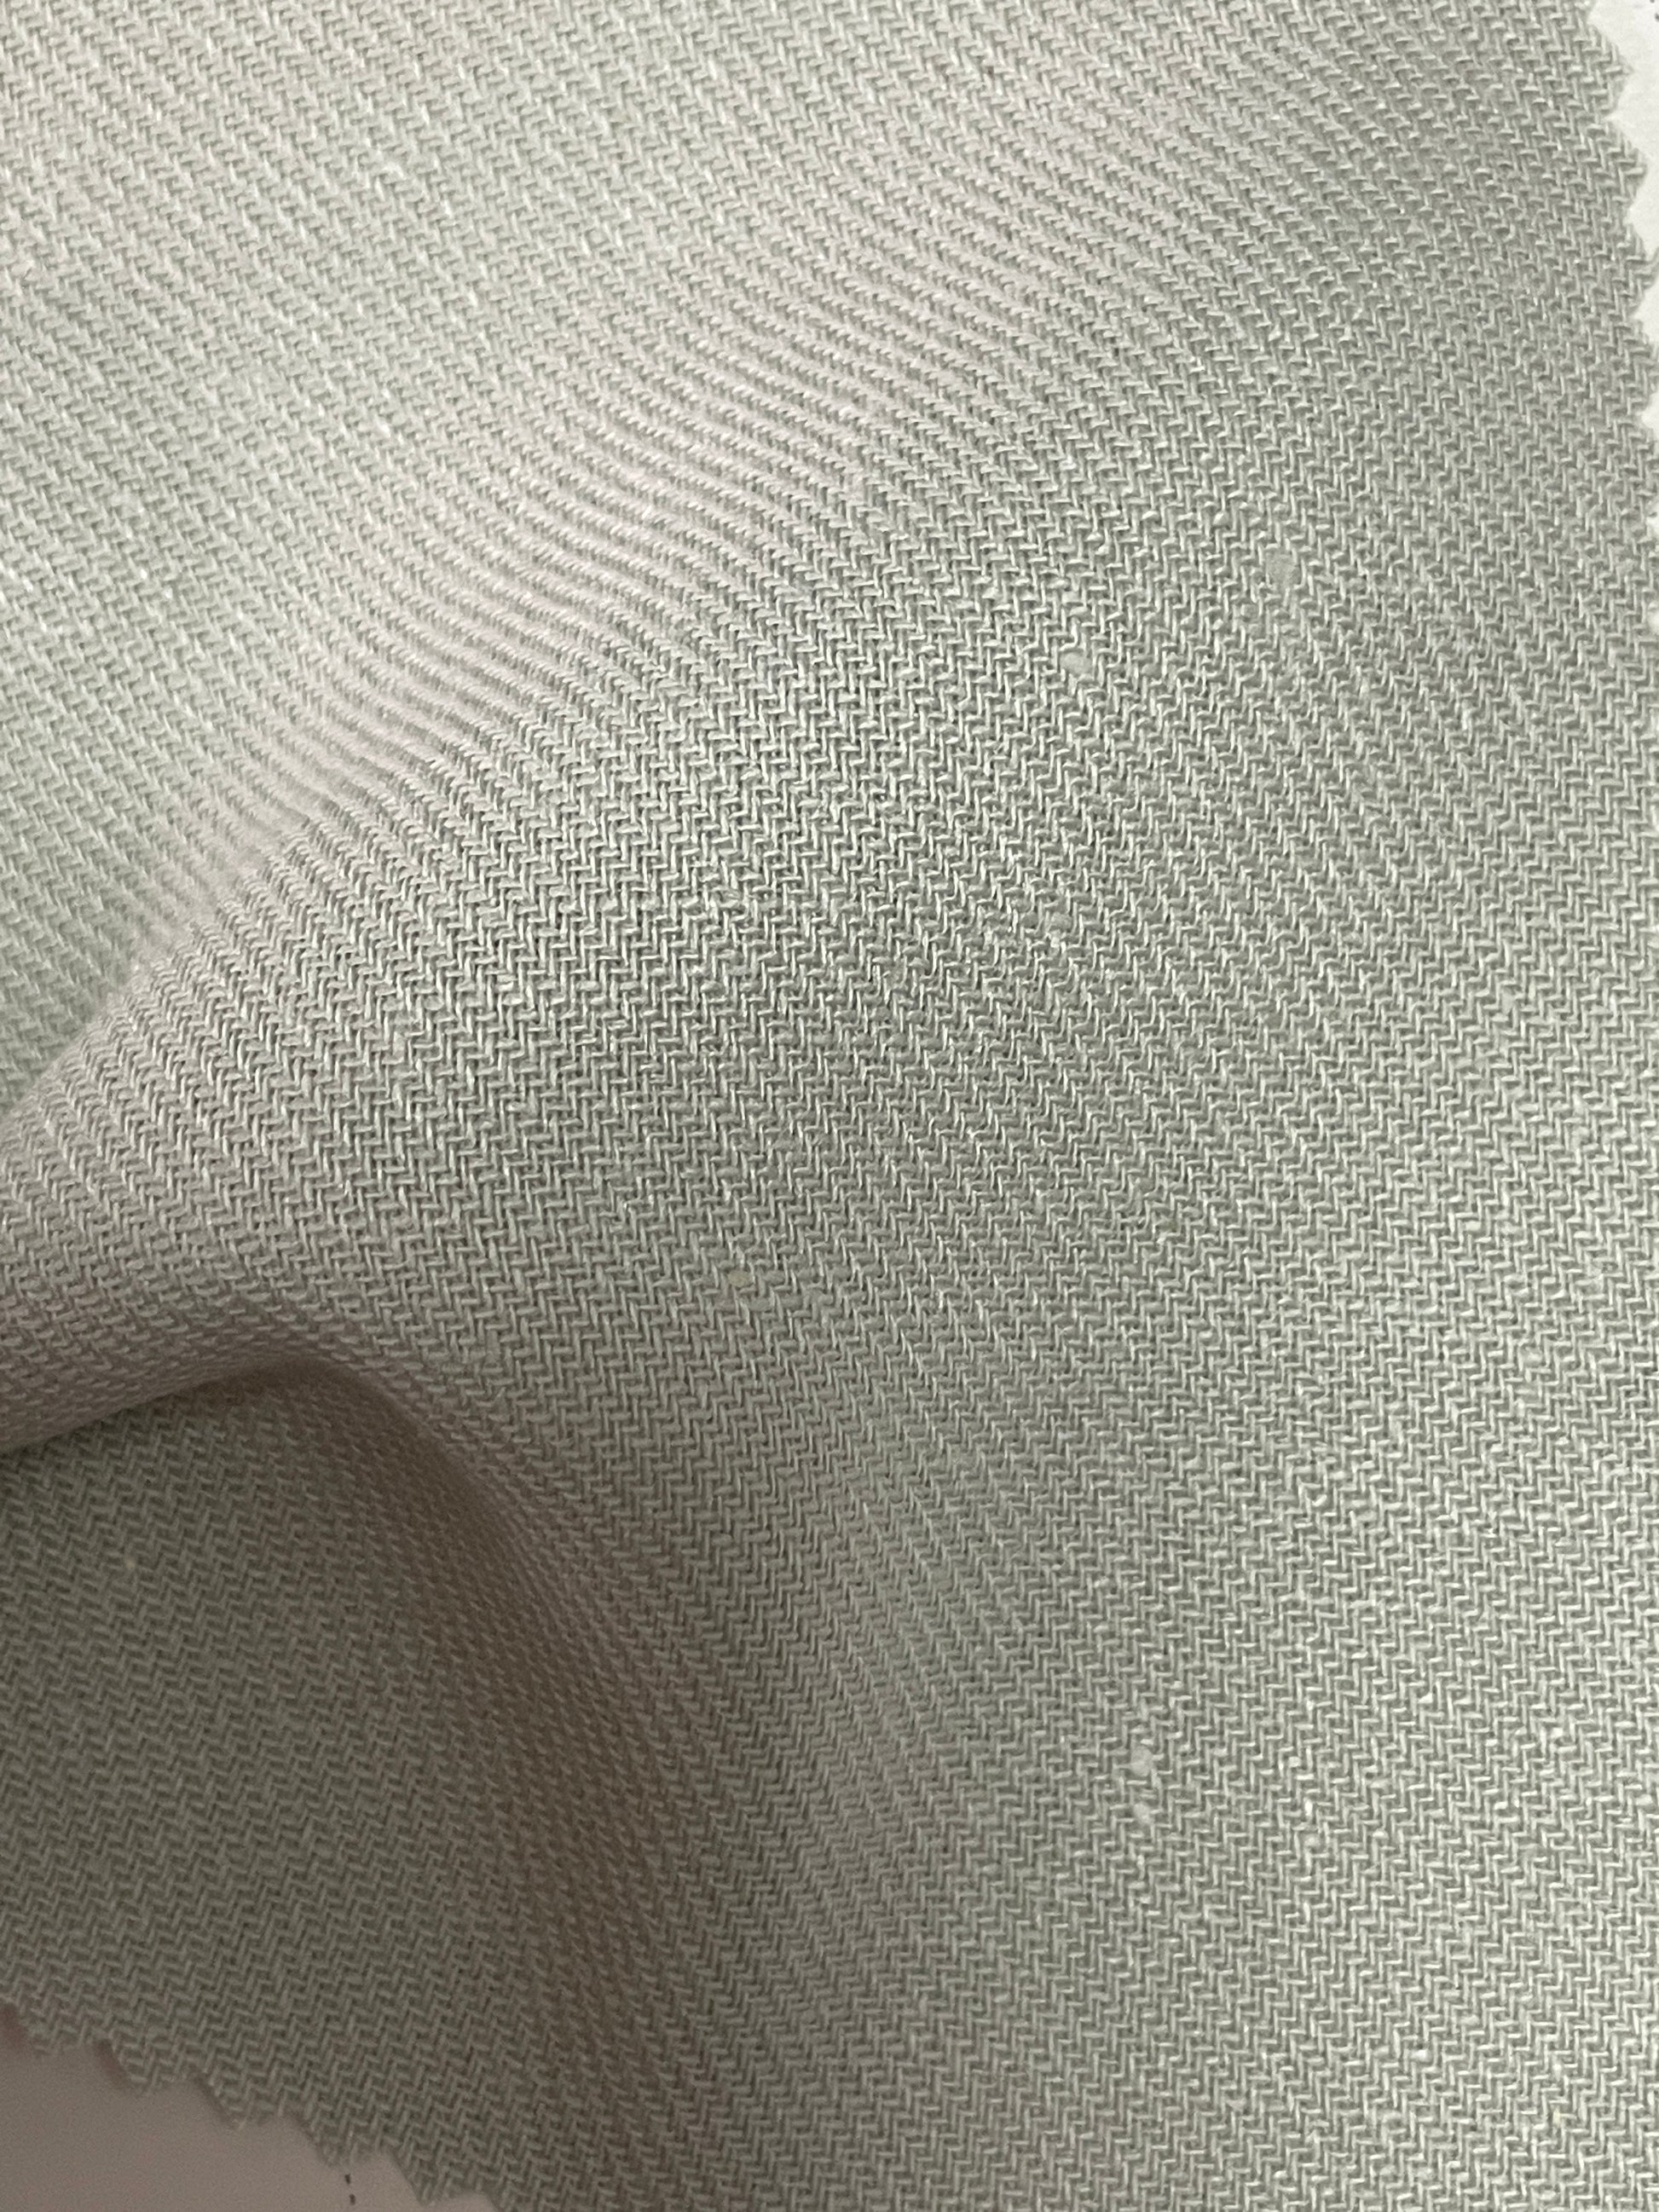 30%Linen 70%Viscose Blended Fabric with Soft Hand Feel - Natasha Fabric